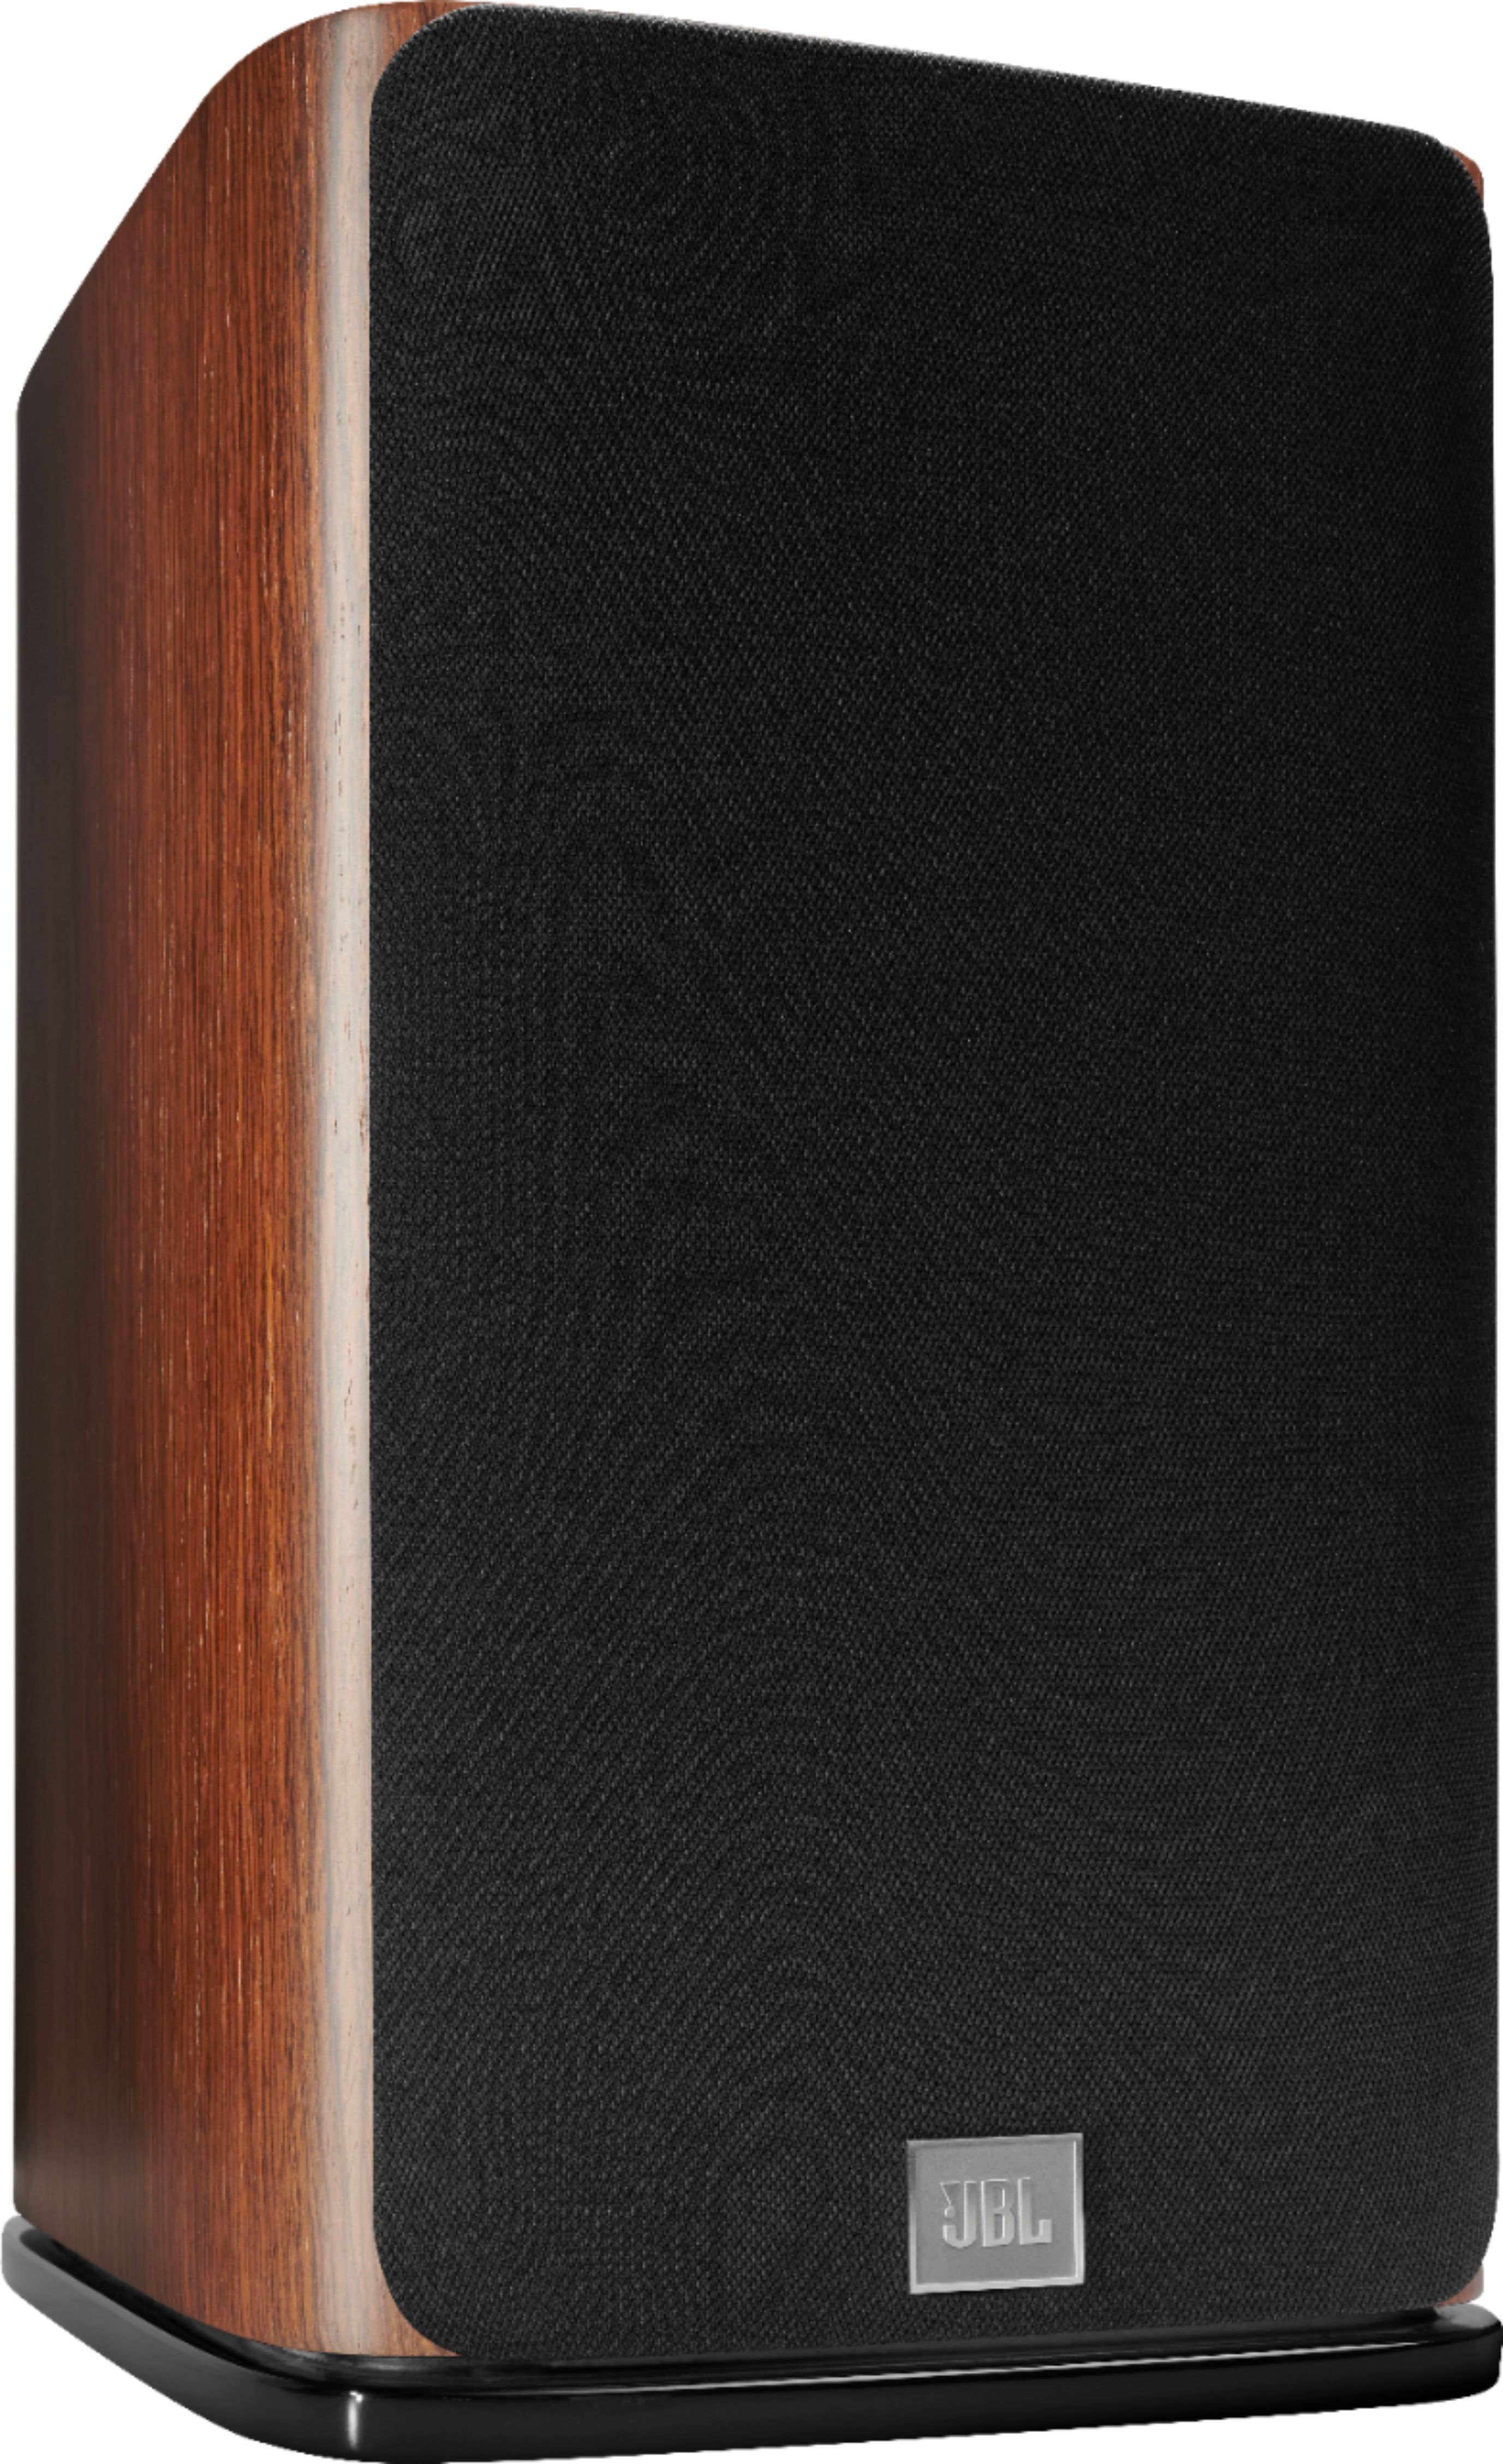 Left View: JBL - HDI1600 6.5" 2-way bookshelf loudspeaker with 1" compression tweeter, each - Walnut Wood Finish